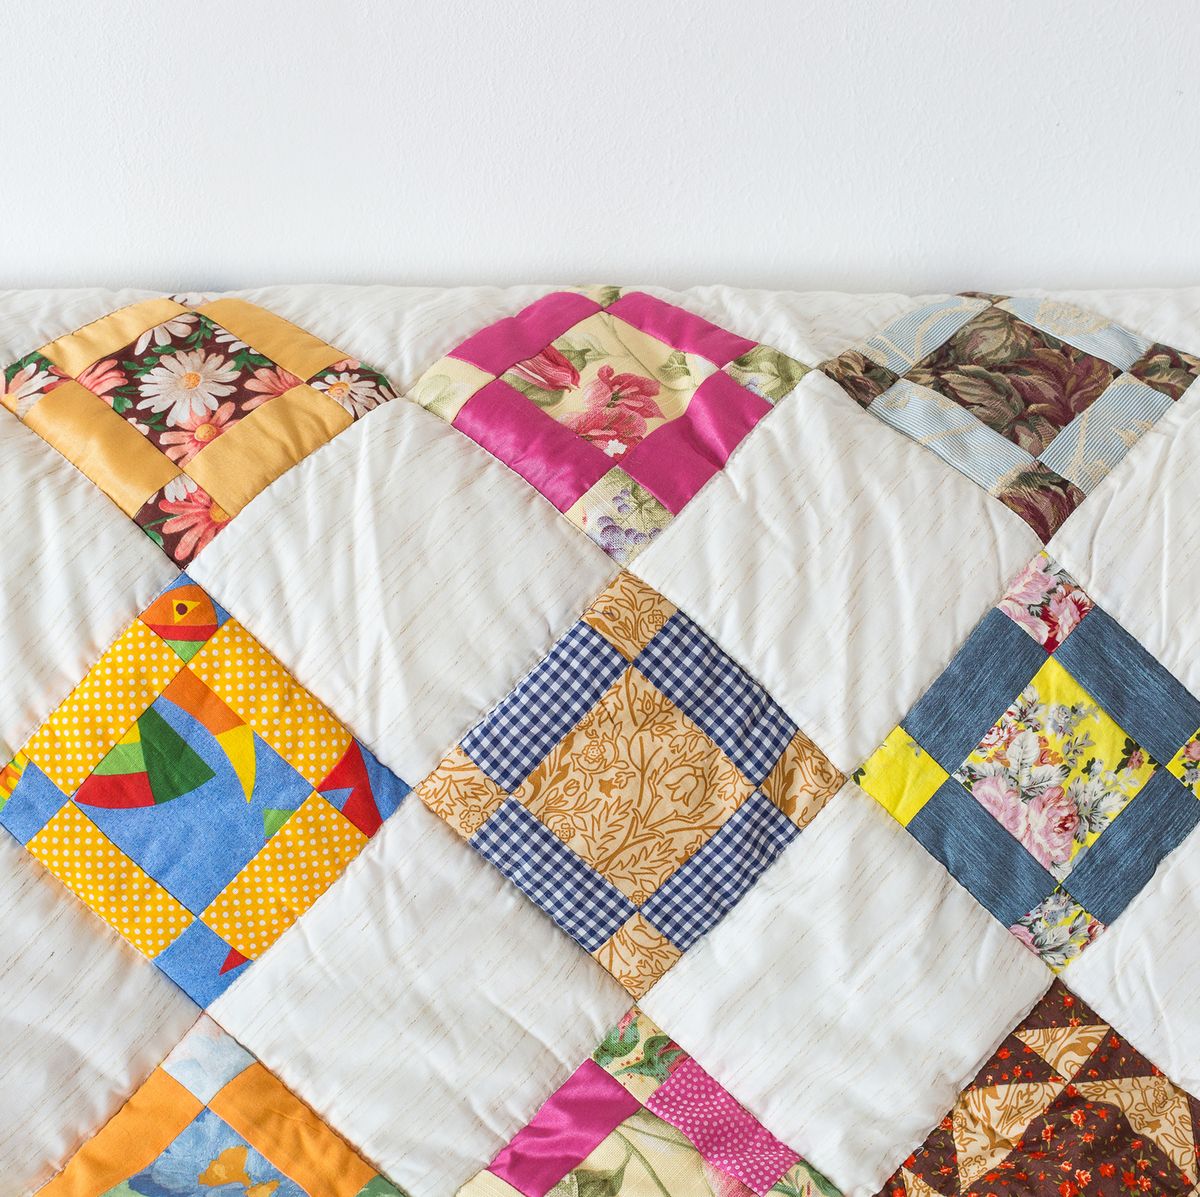 Bovenstaande klant In de genade van How to make a patchwork quilt – a beginner's guide to patchwork and quilting